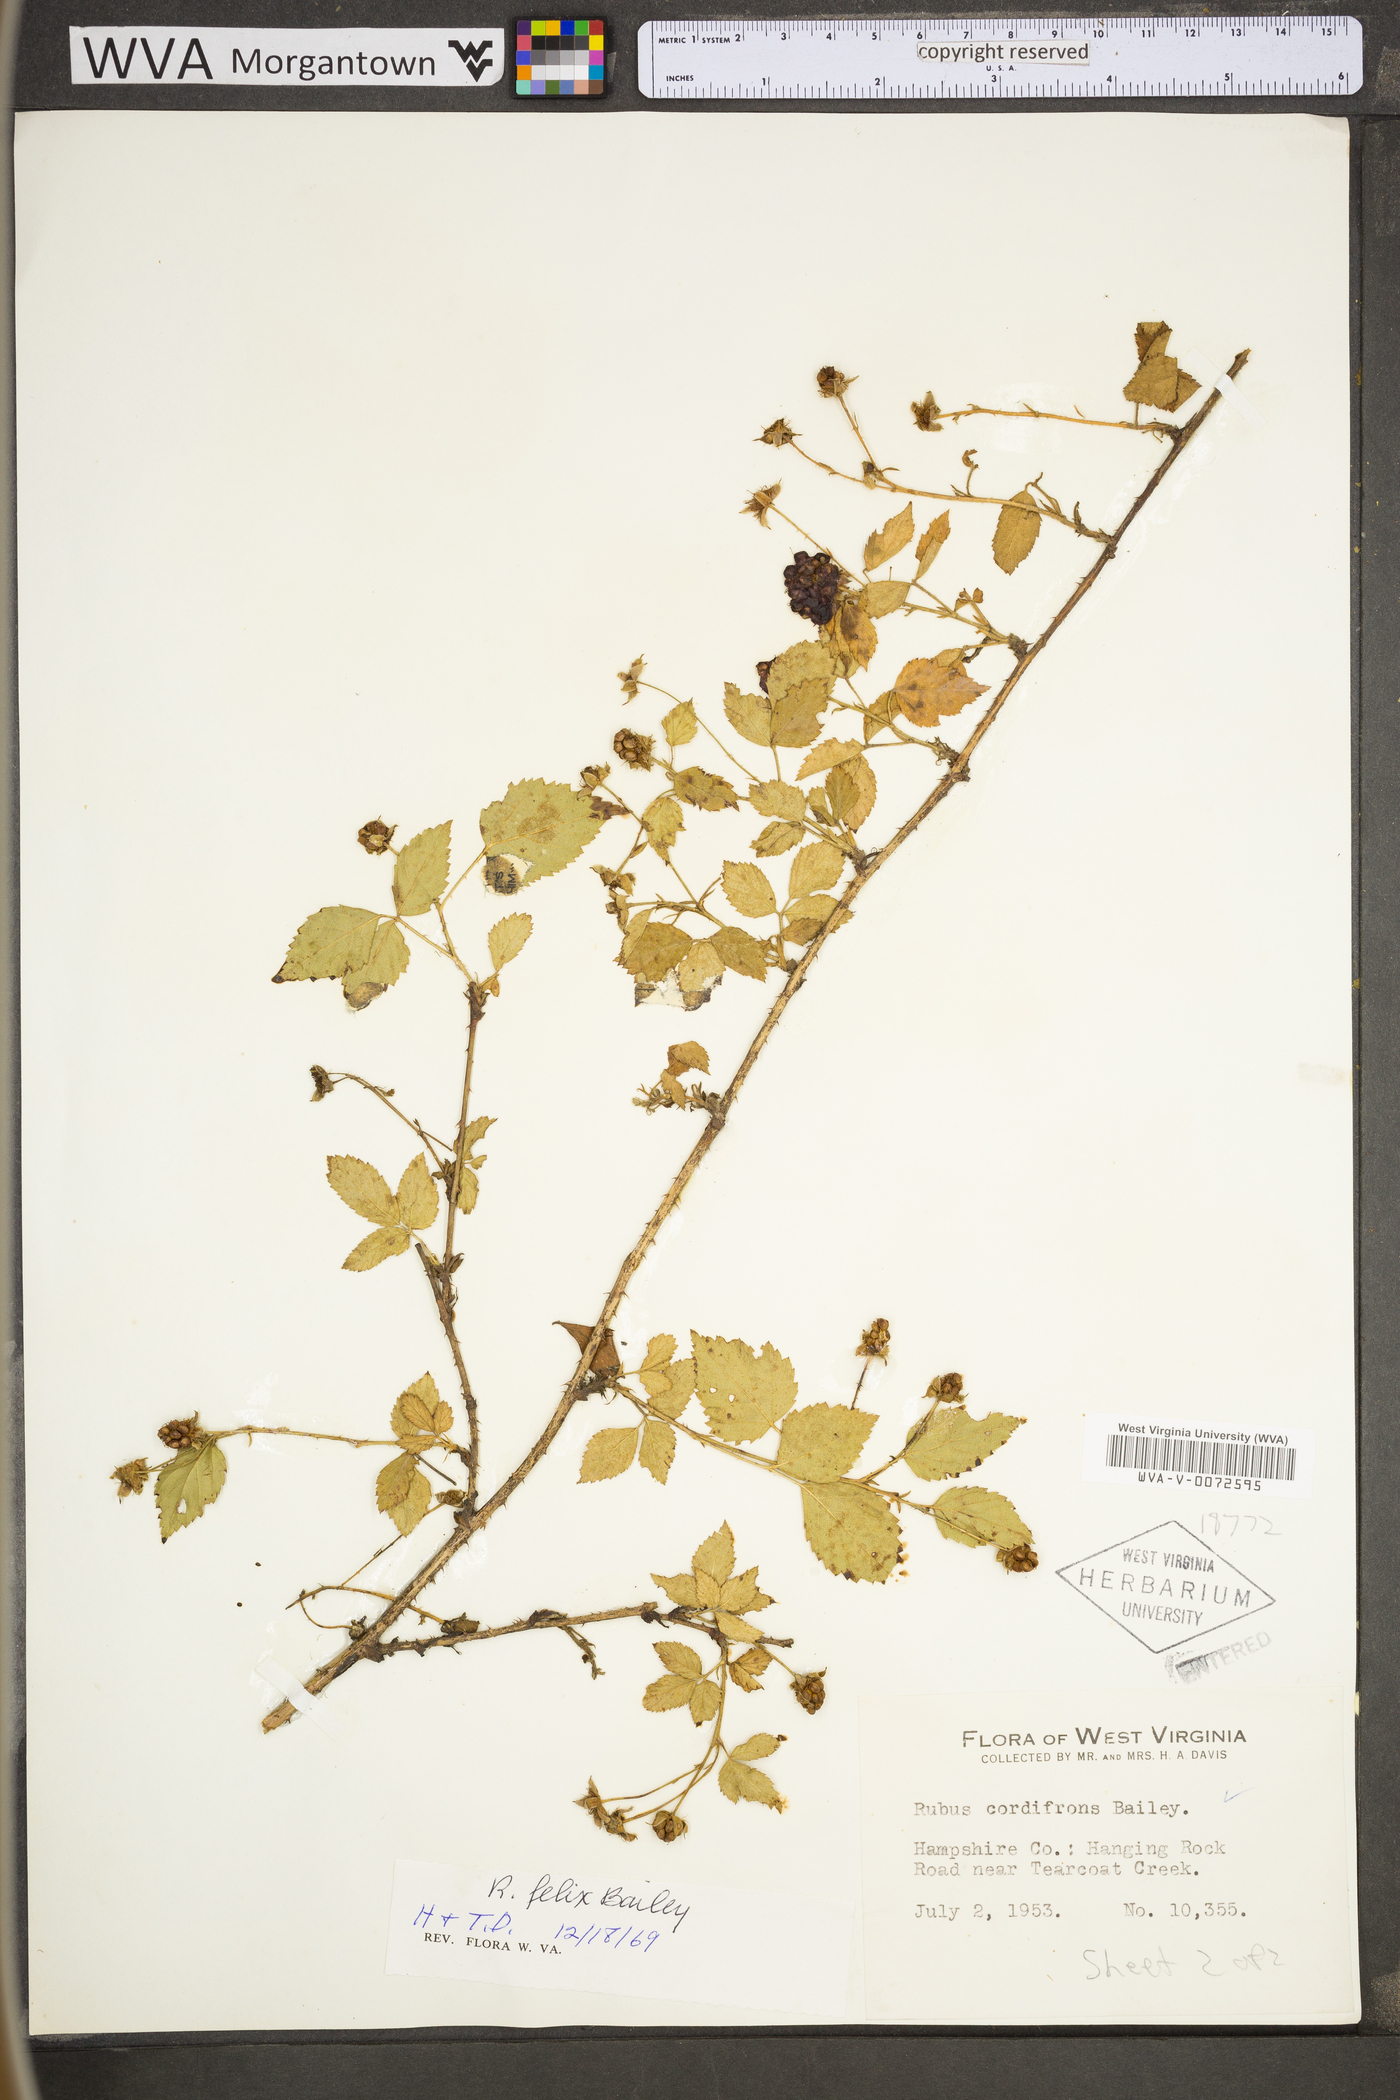 Rubus felix image